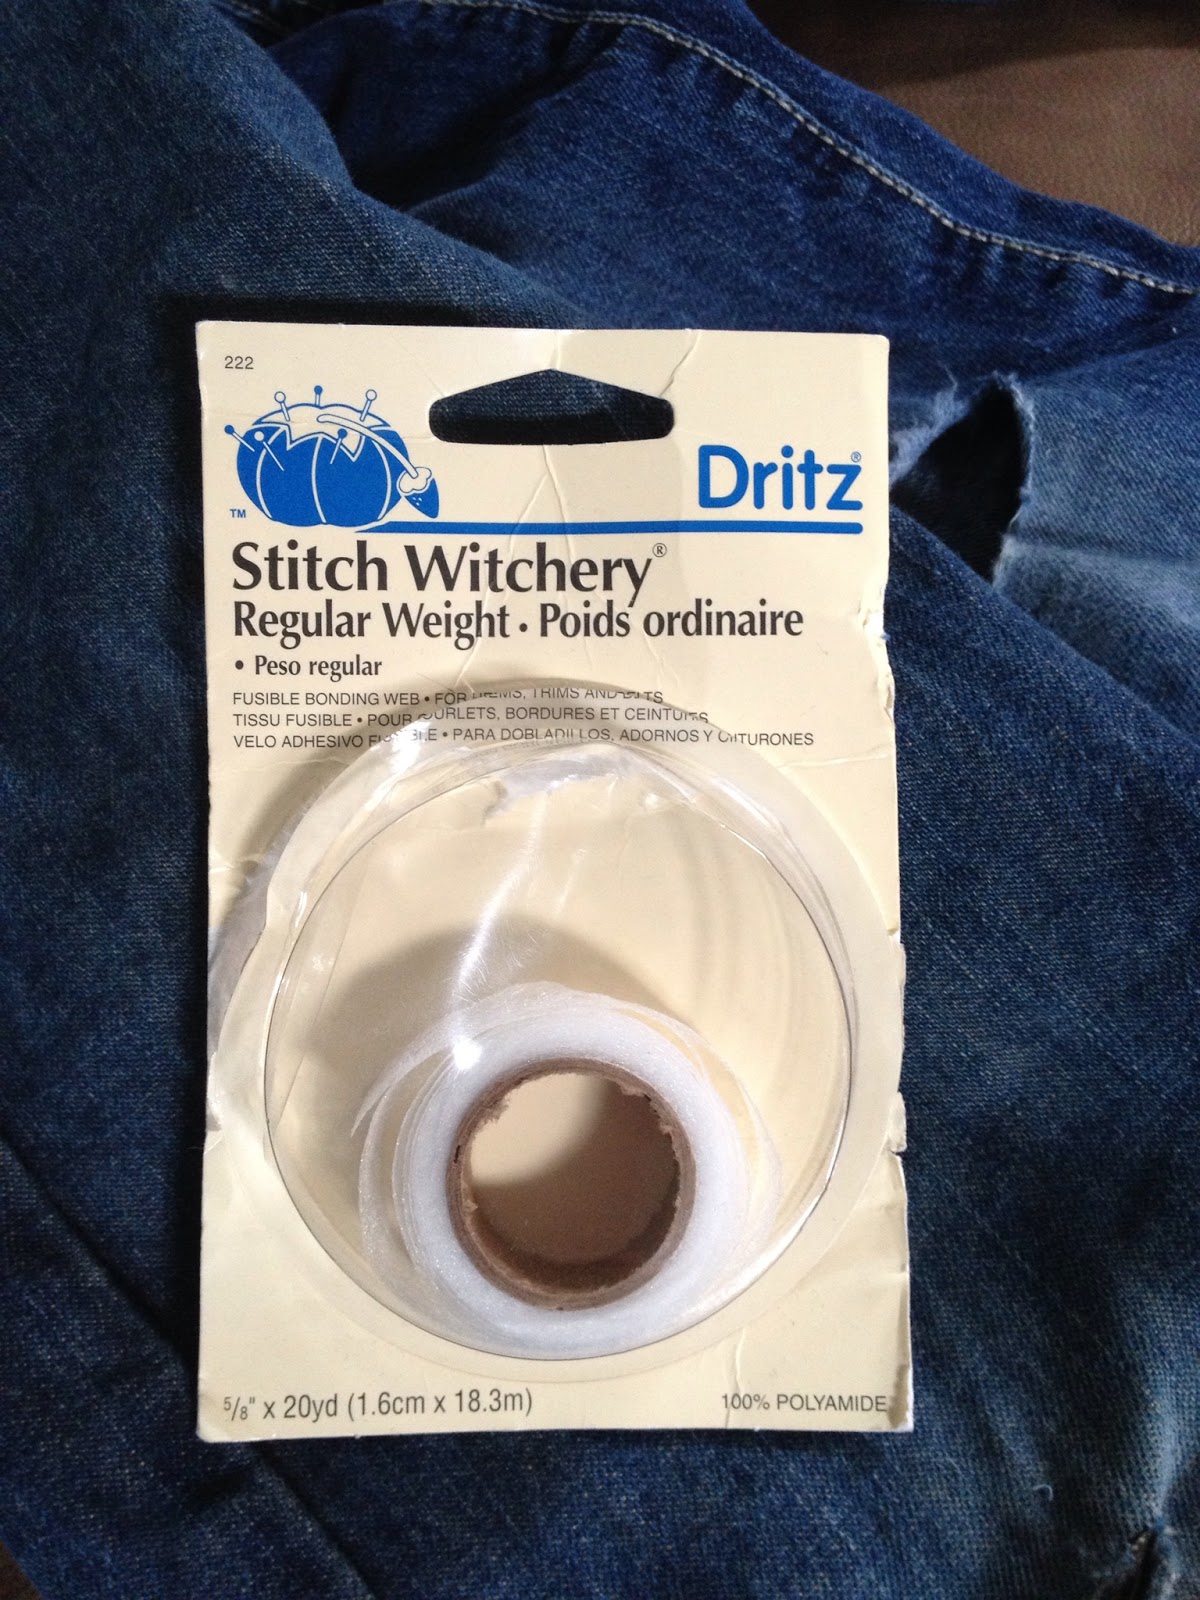 Dritz Stitch Witchery Fusible Bonding Web Narrow